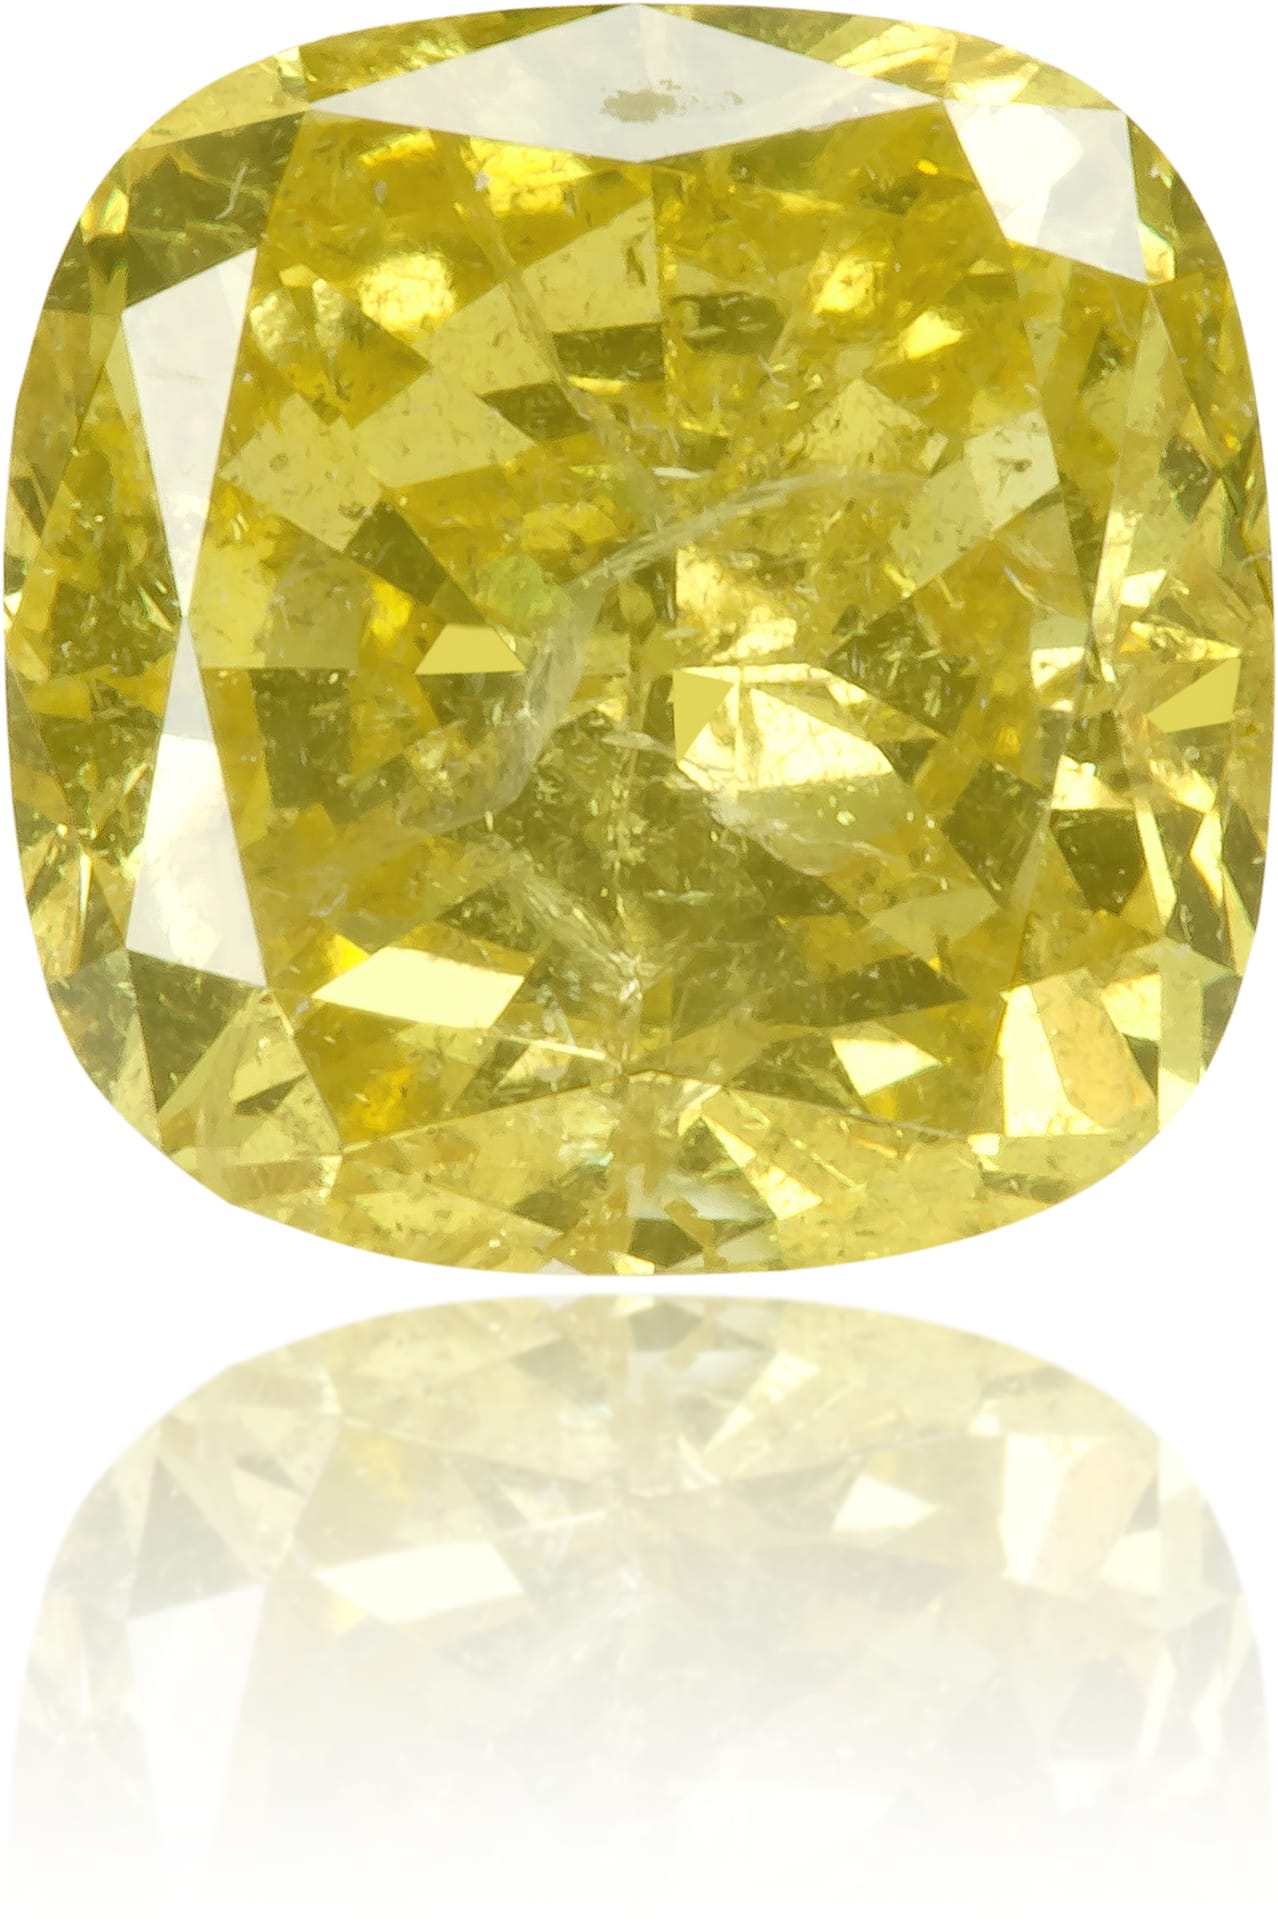 Natural Yellow Diamond Square 1.04 ct Polished